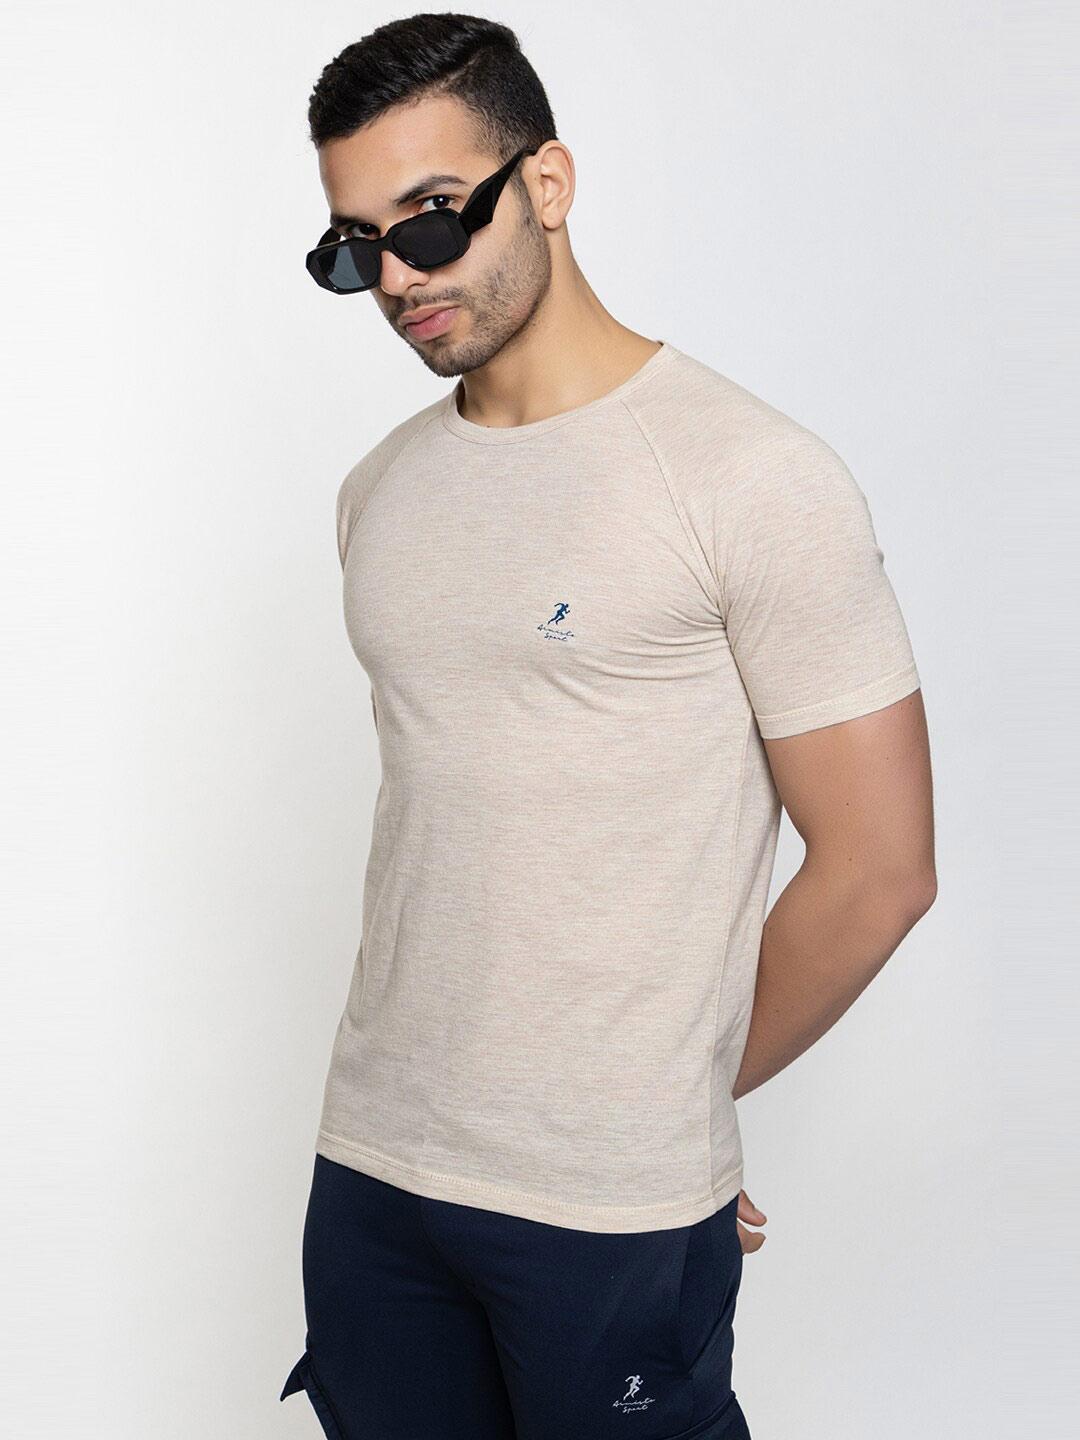 armisto round neck raglan sleeves absorb technology cotton t-shirt